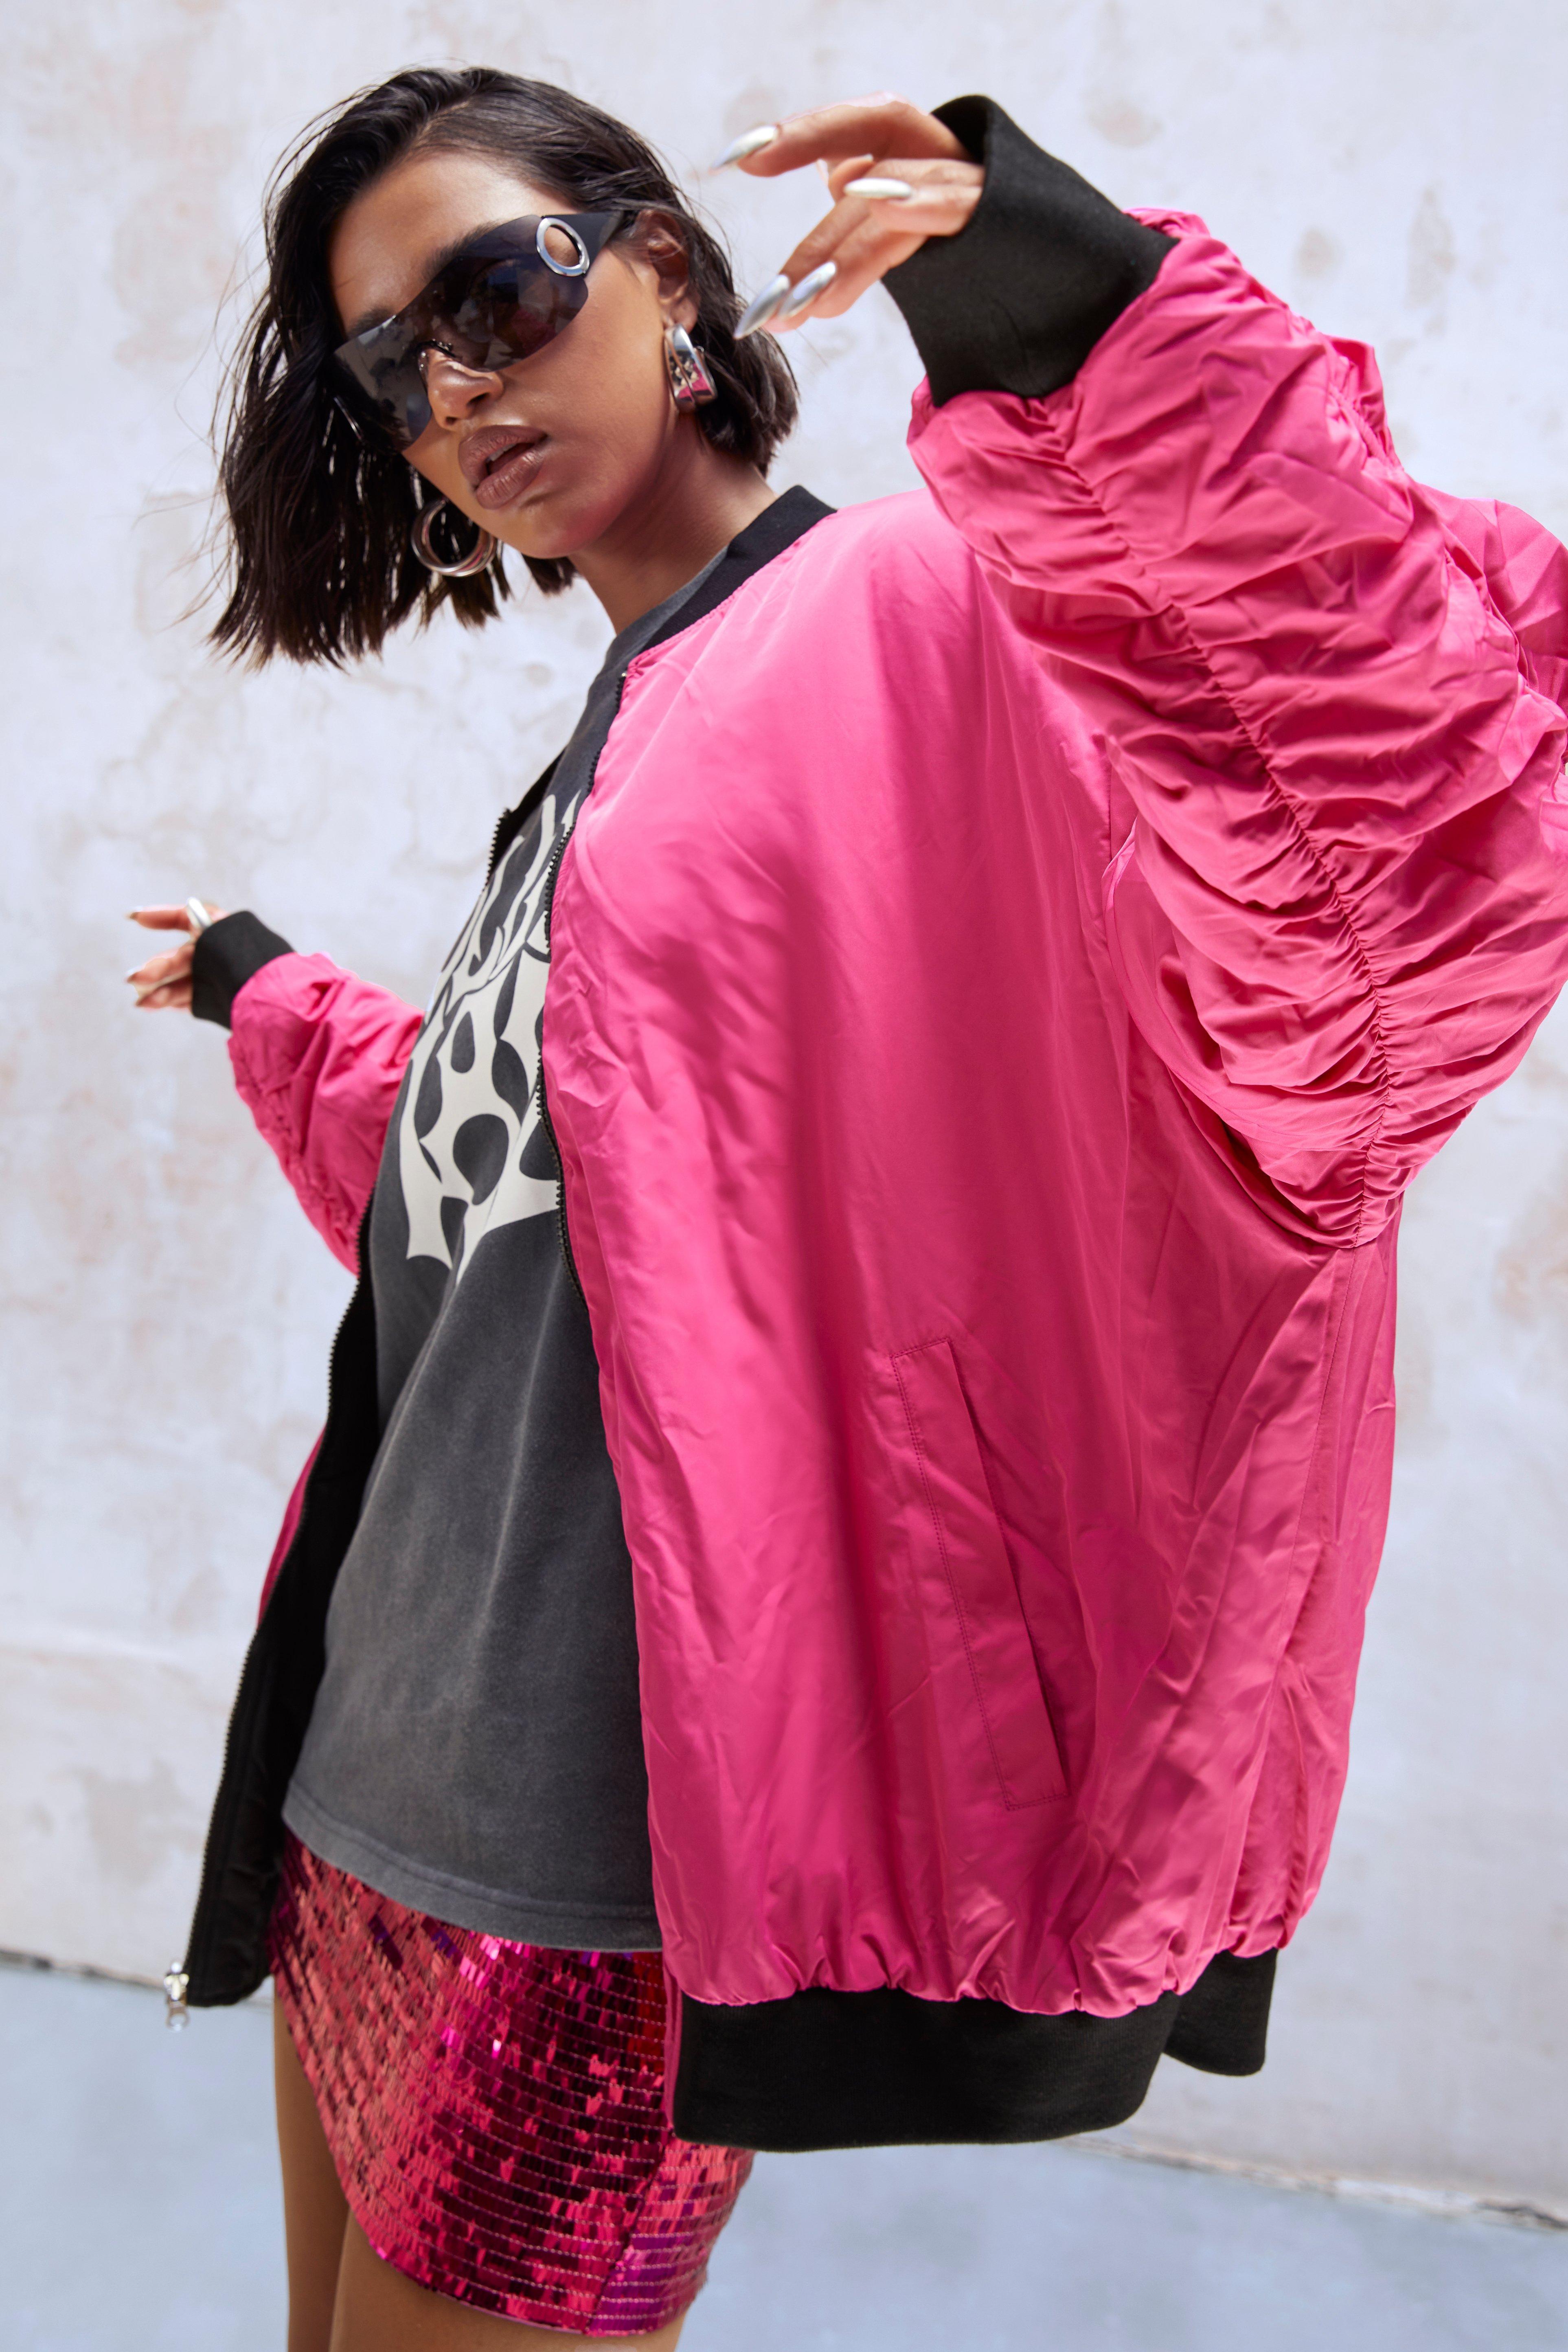 Boohoo Kourtney Kardashian Barker Reversible Bomber Jacket in Pink | Lyst